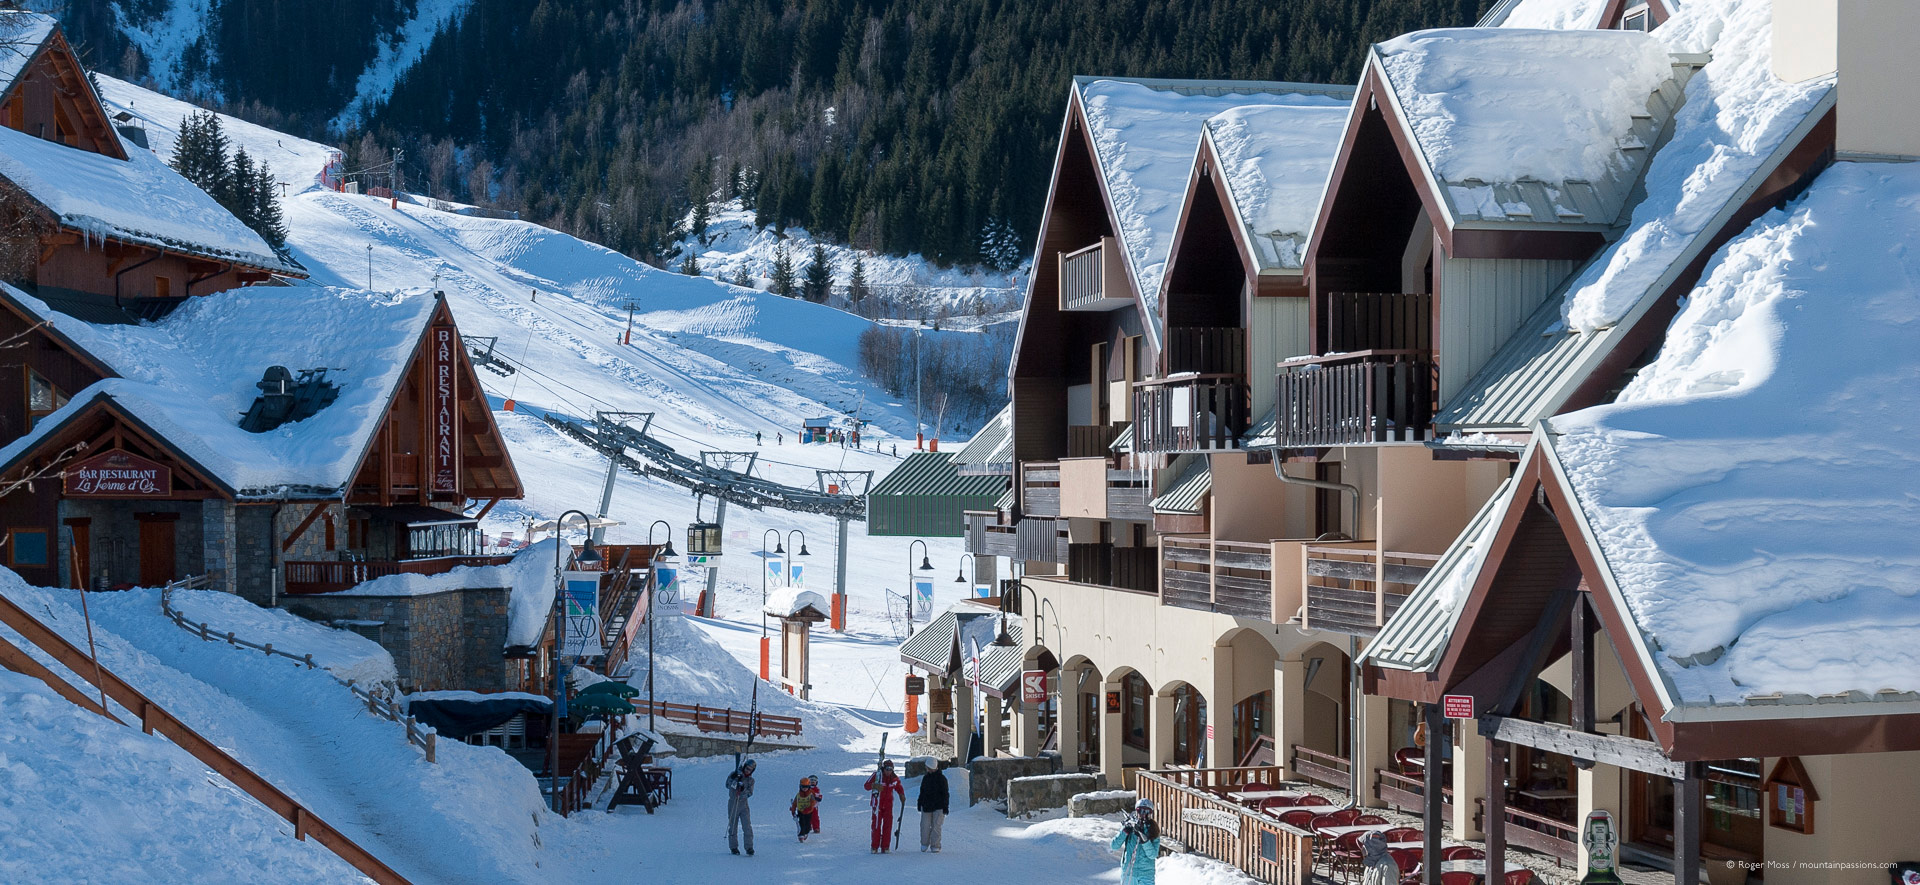 View through ski village to mountainside with visitors